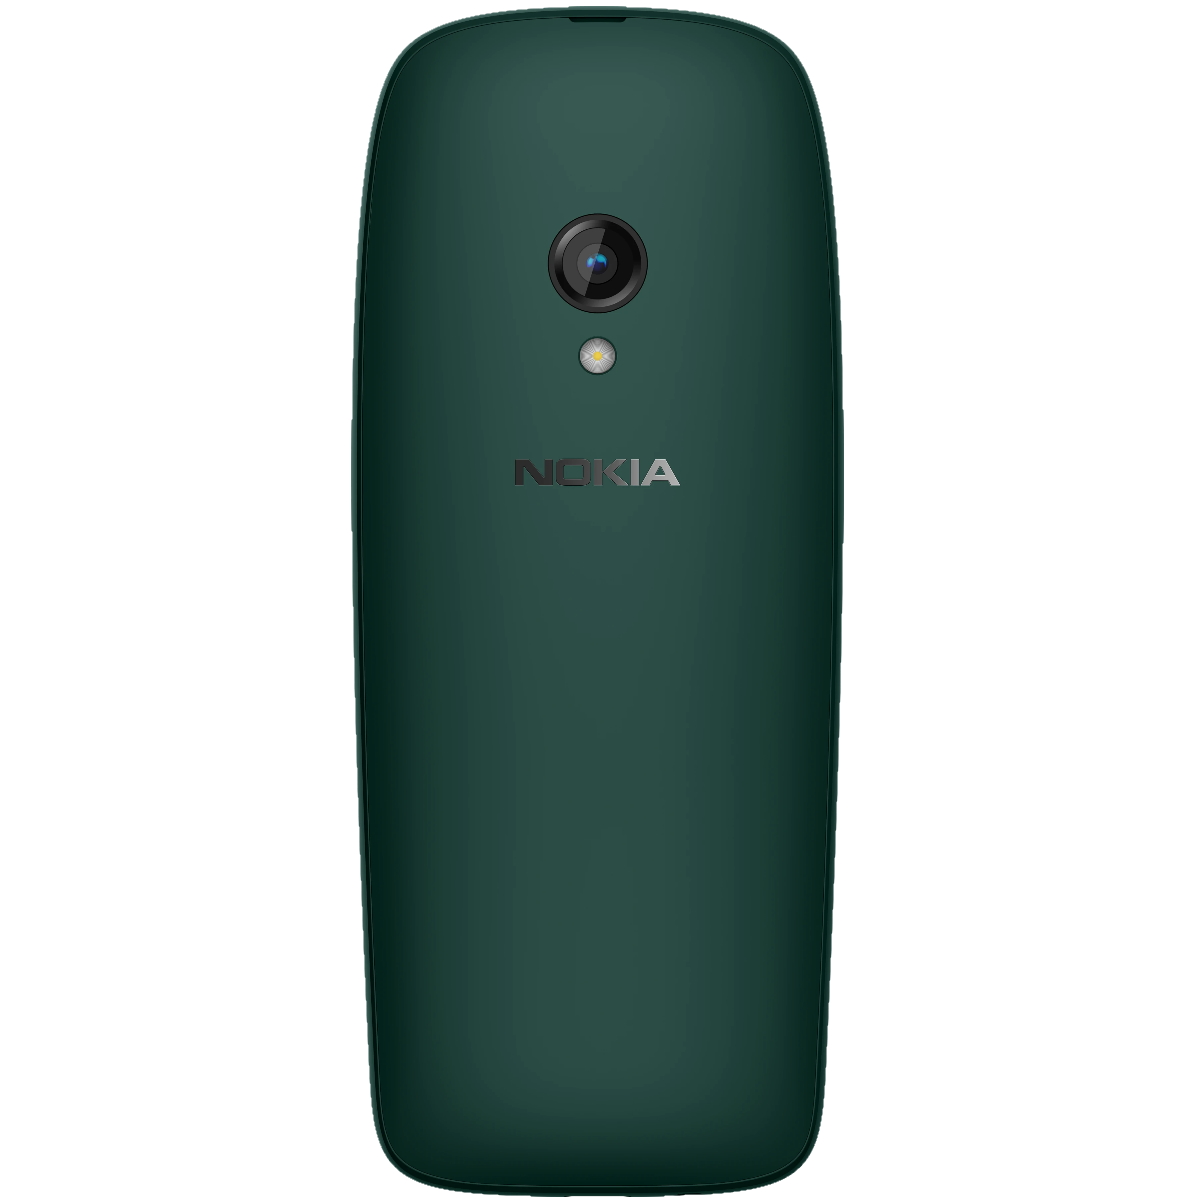 Telefon Cu Butoane Nokia 6310  Ecran 28 Inch Dual Sim  Rez Camera 03 Mpix  Memorie Interna 8 Mb 2g Oem Acumulator 1150 Mah Verde 16pose01a05 Include Tv 05lei